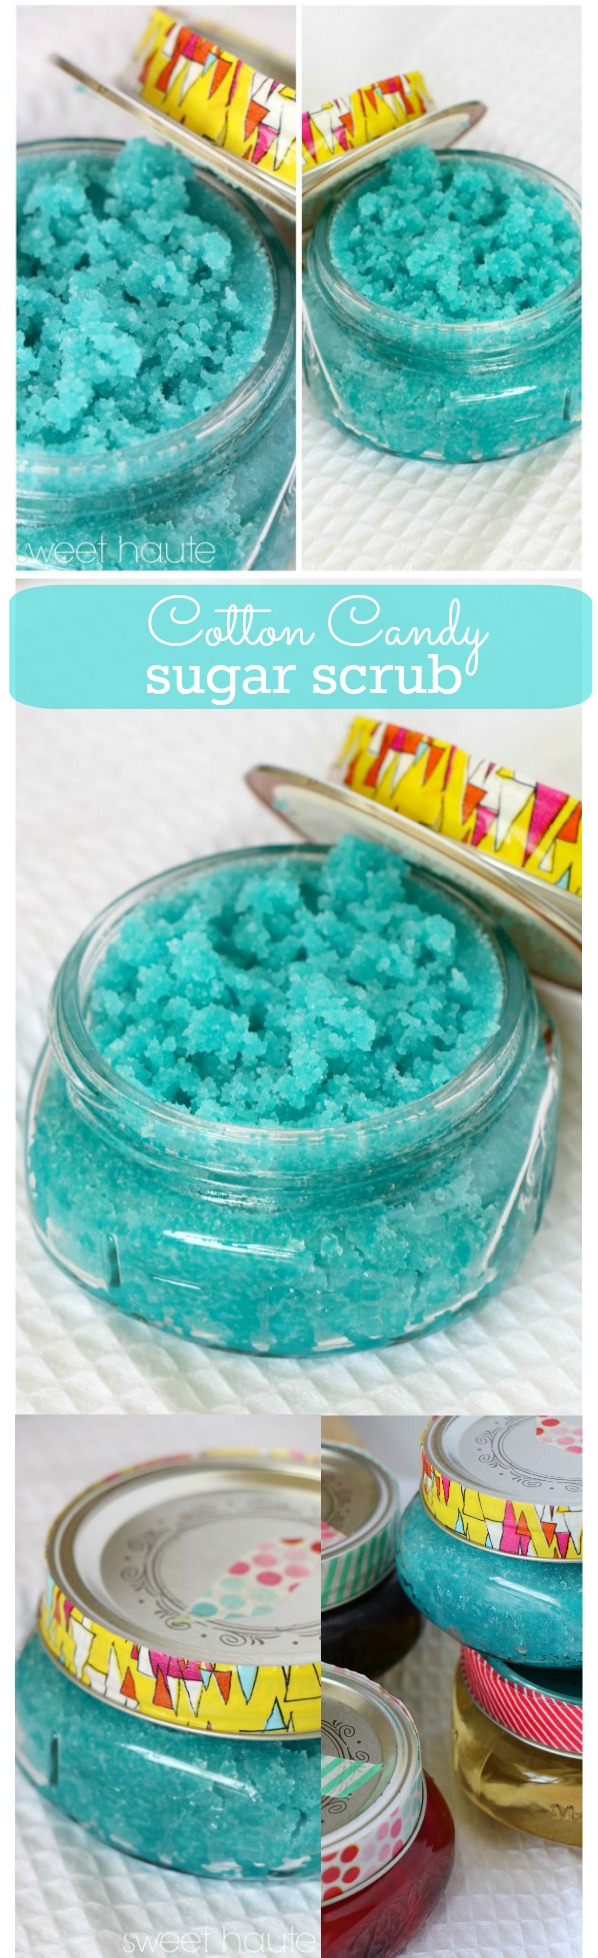 http://sweethaute.blogspot.com/2015/04/berry-blue-cotton-candy-sugar-scrub.html